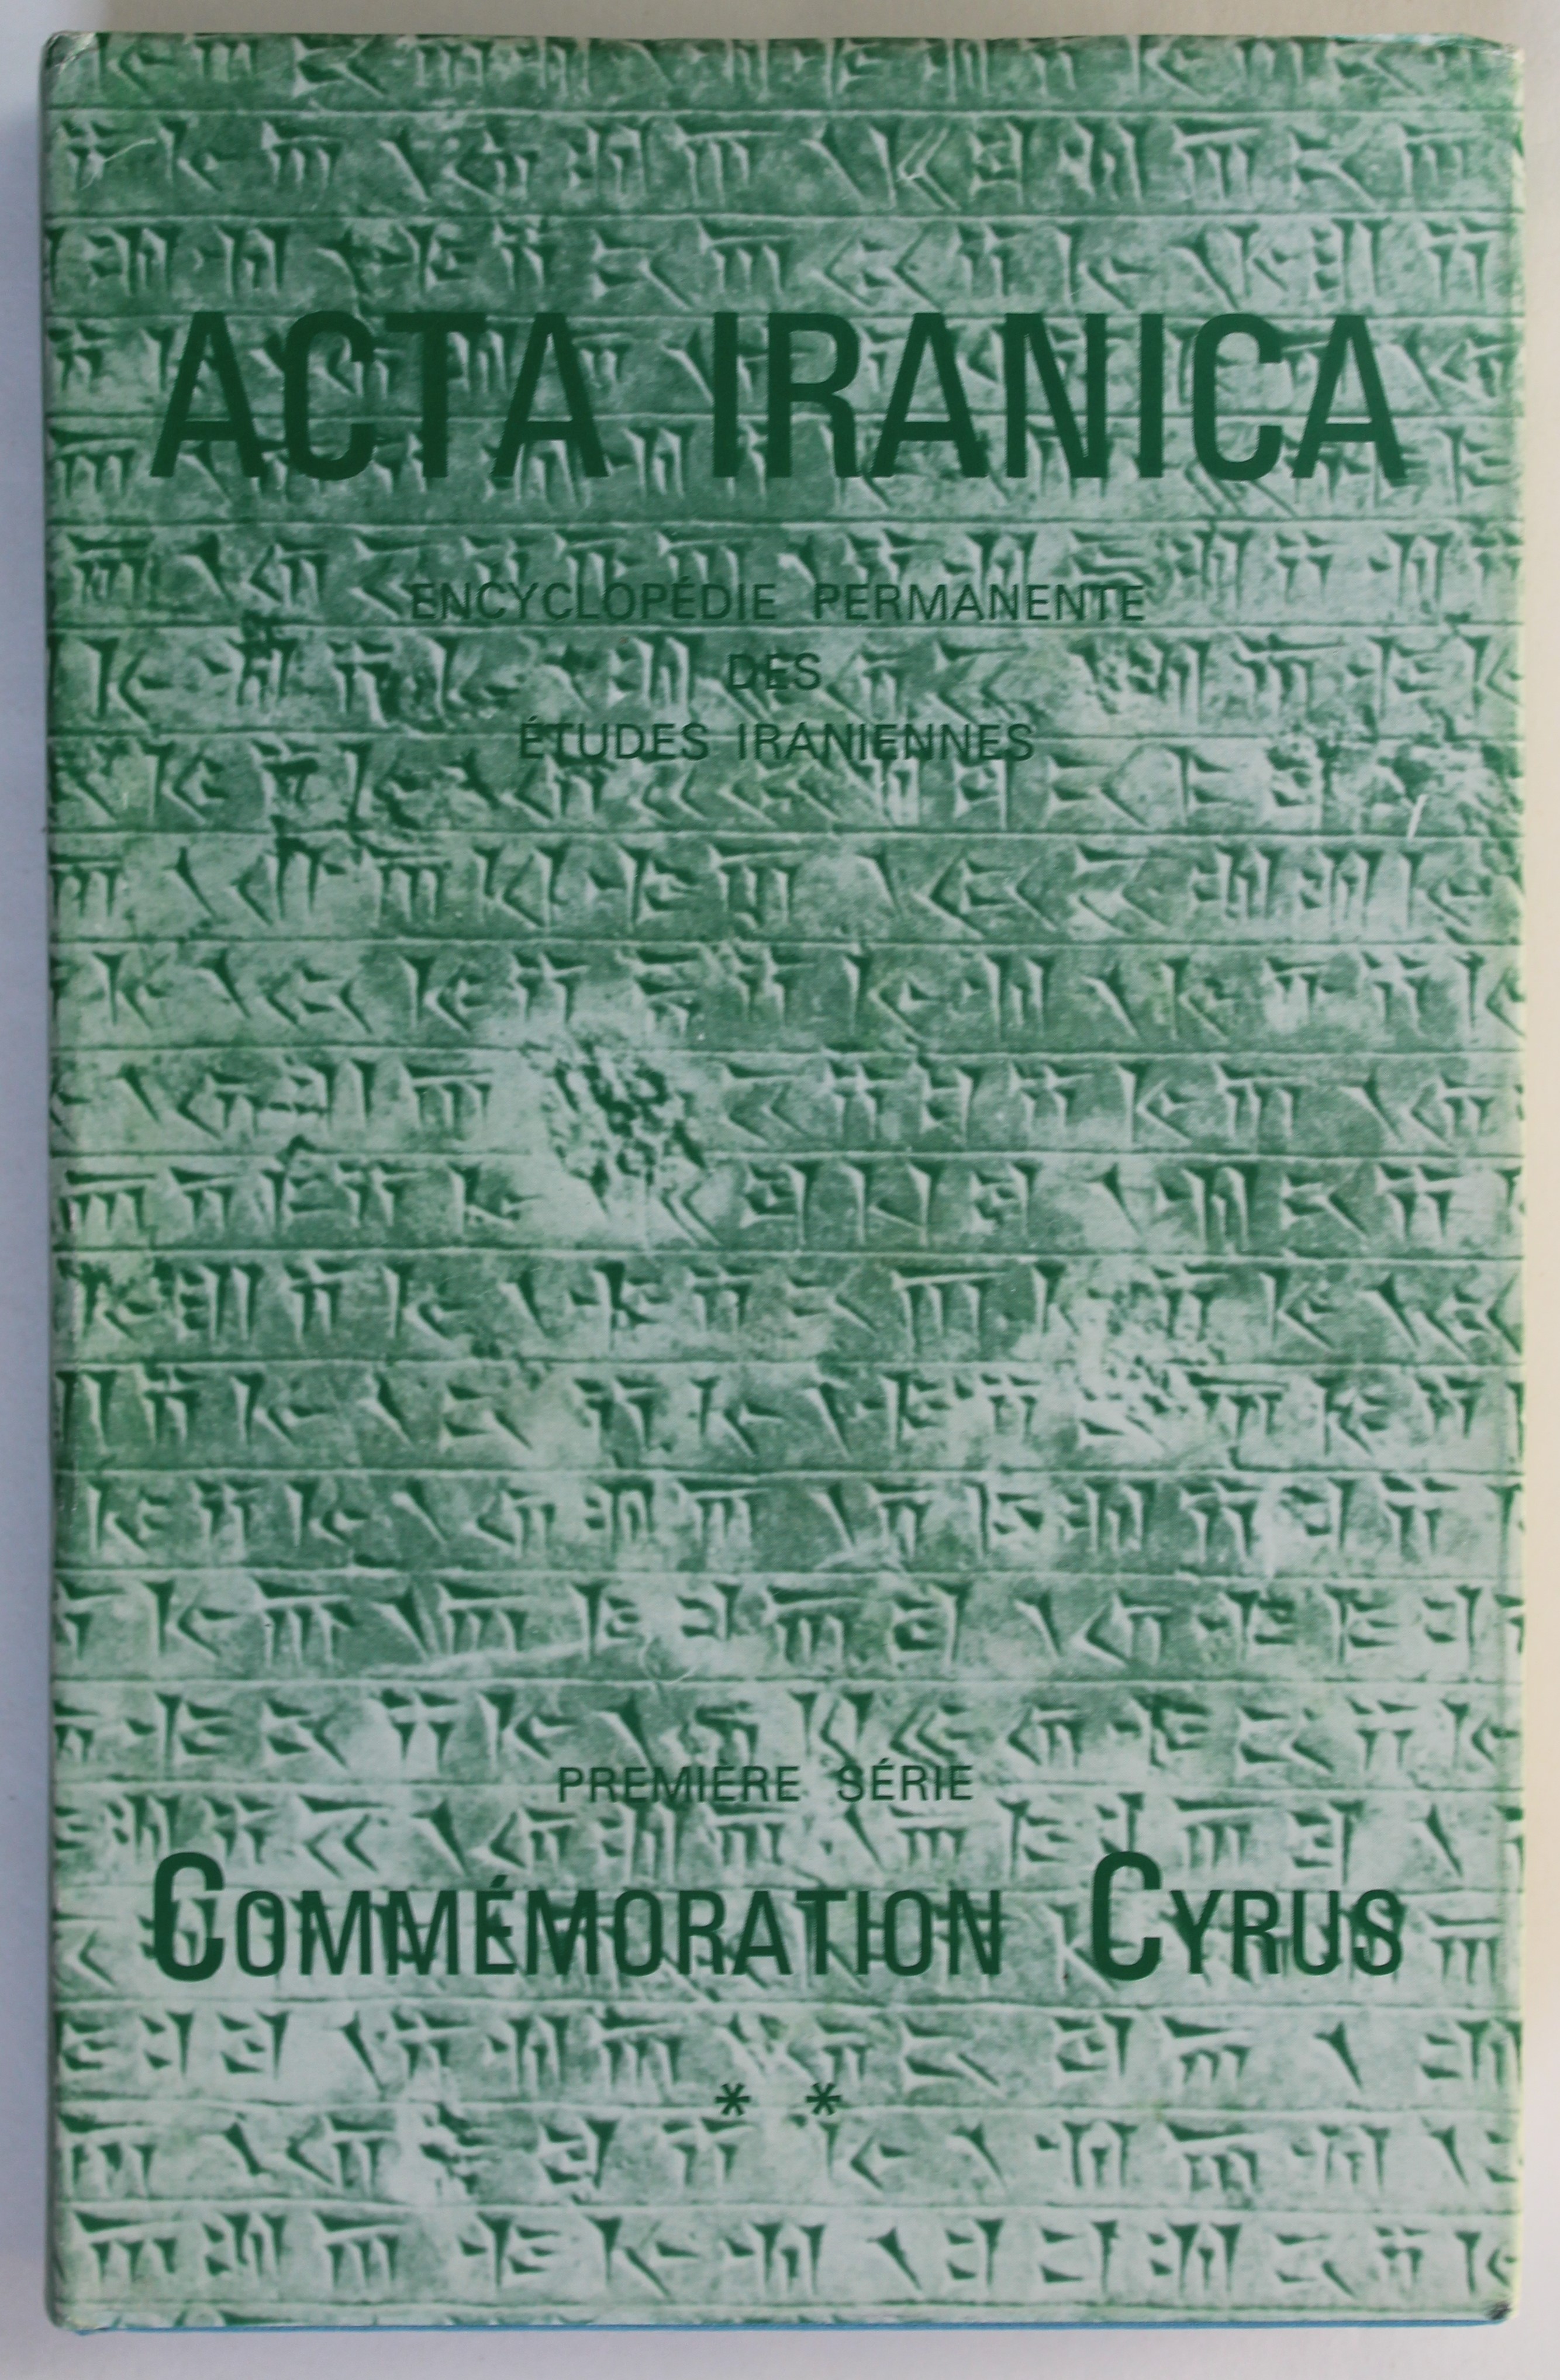 Acta Iranica First Series, Vol.2, Commemoration Cyrus - Various